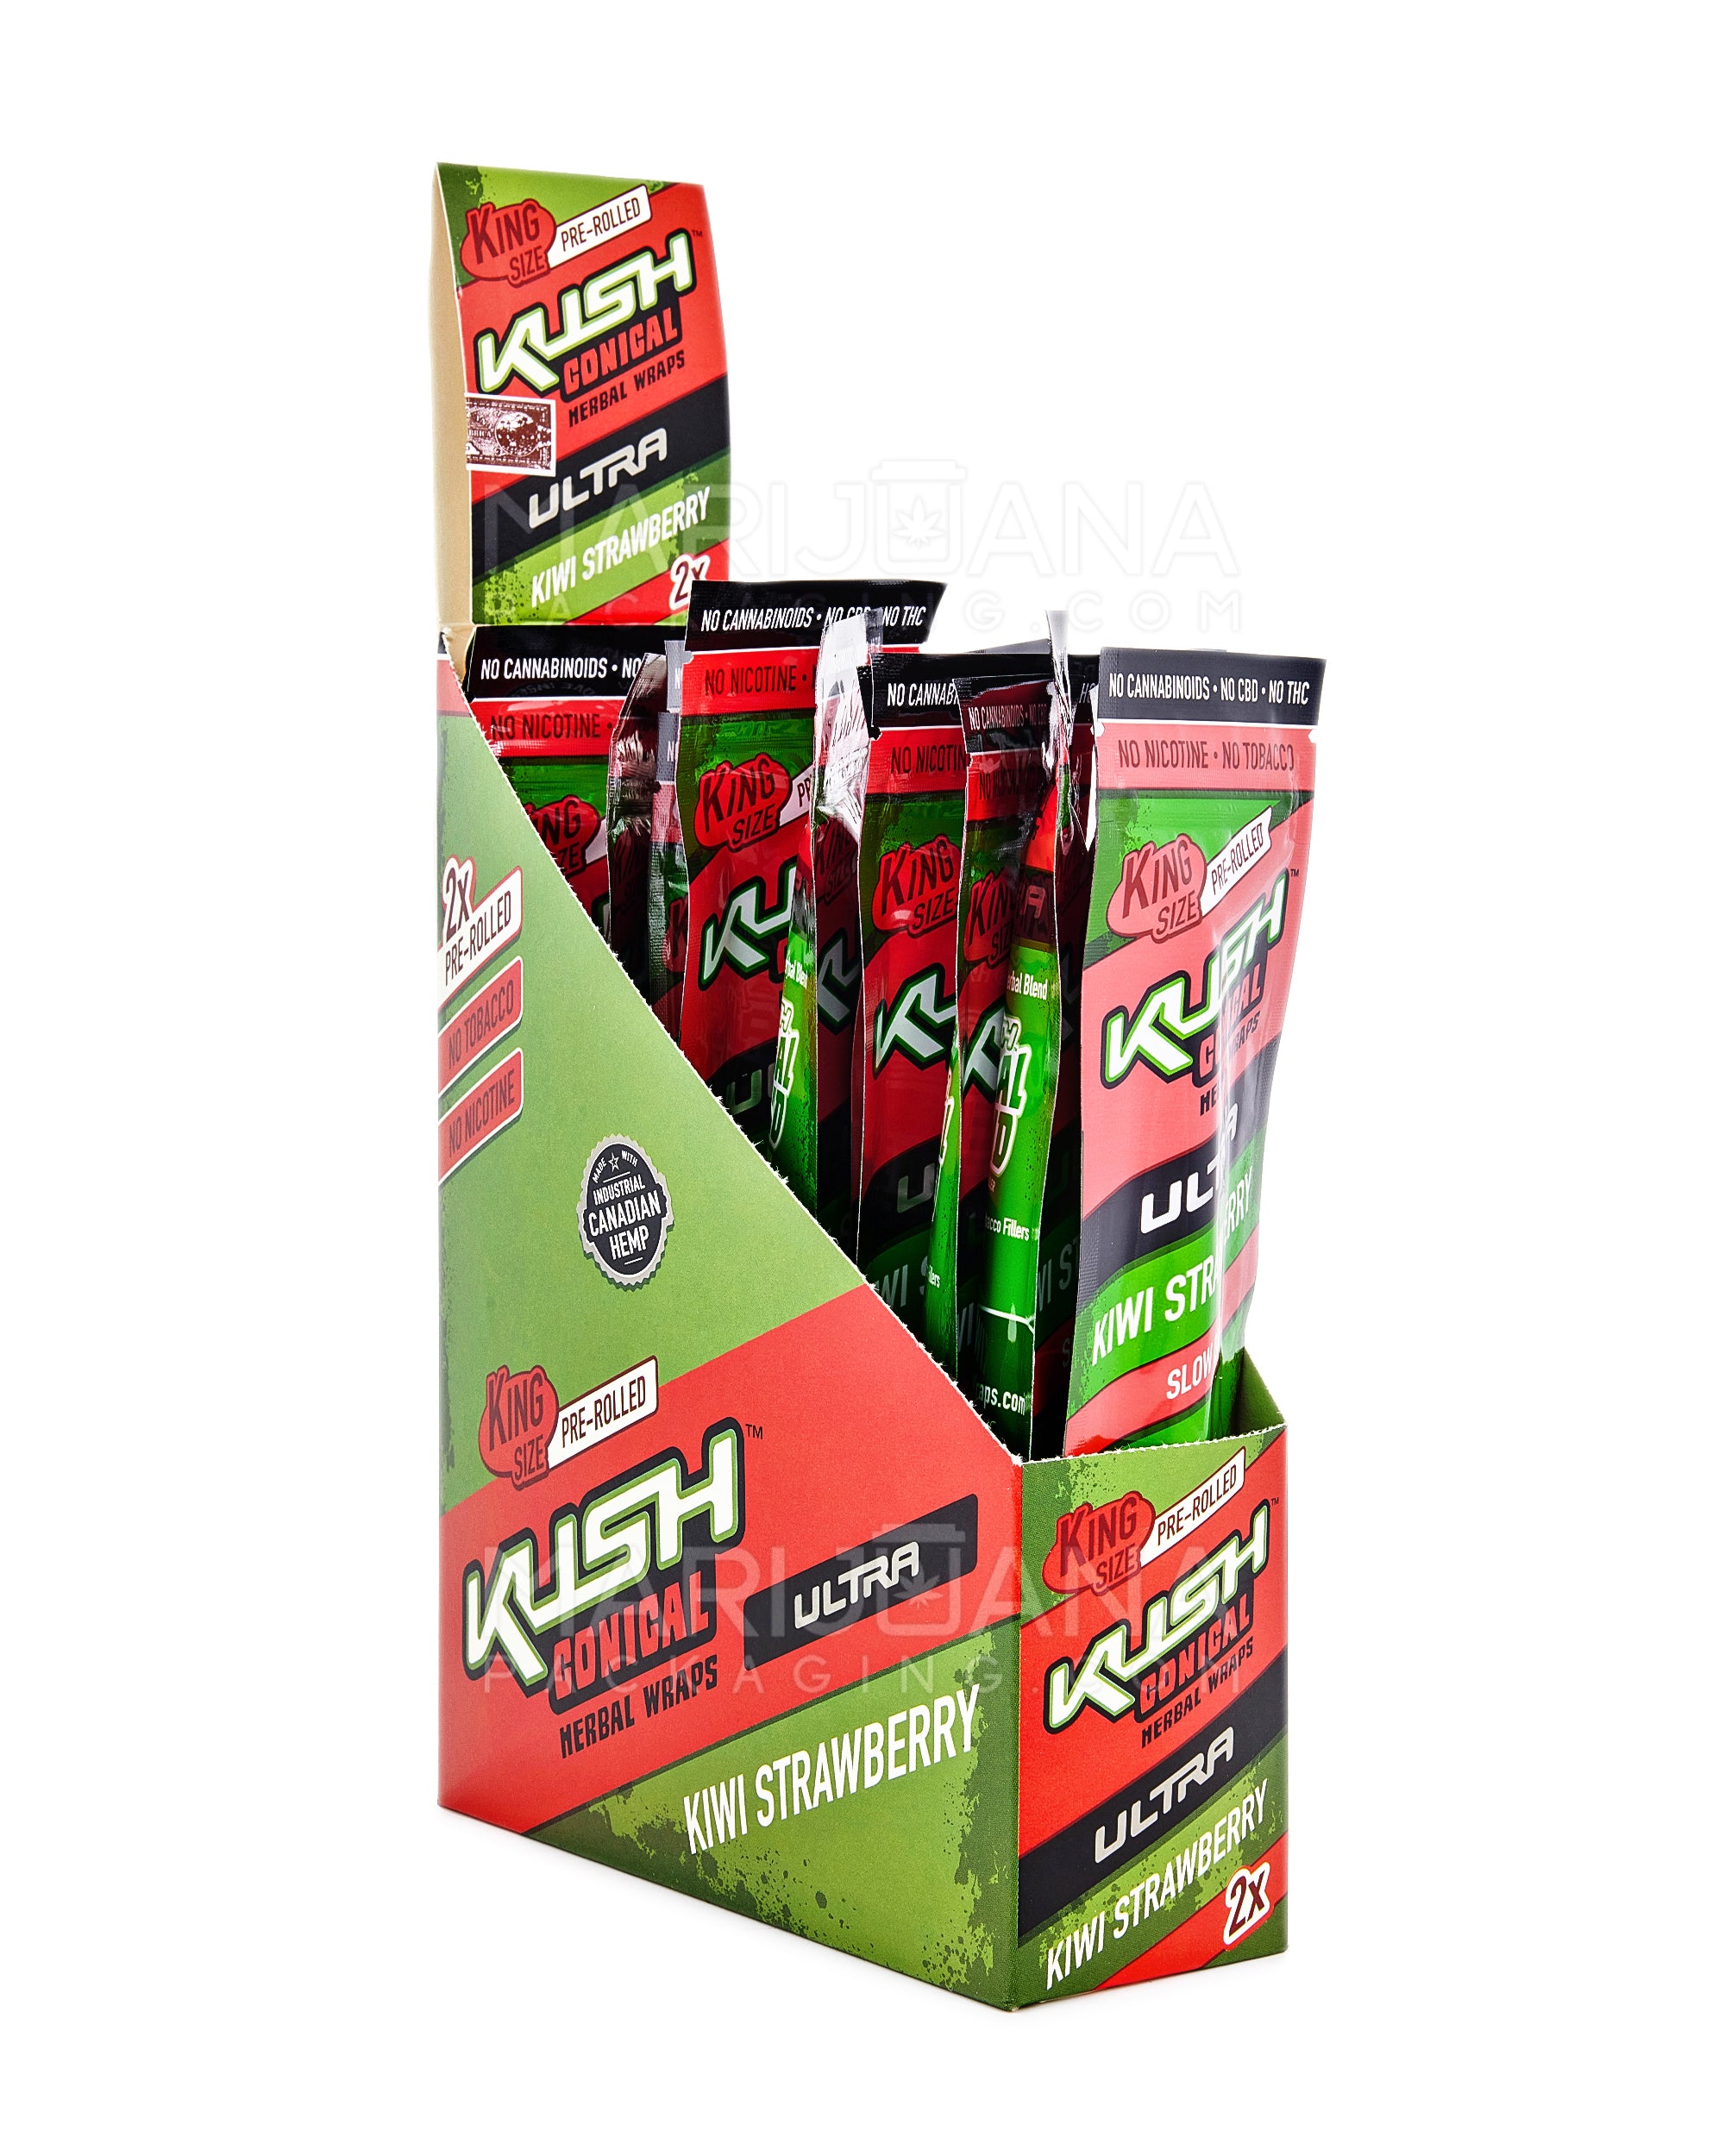 KUSH | 'Retail Display' Ultra Herbal Hemp Conical Wraps | 157mm - Kiwi Strawberry - 15 Count - 1